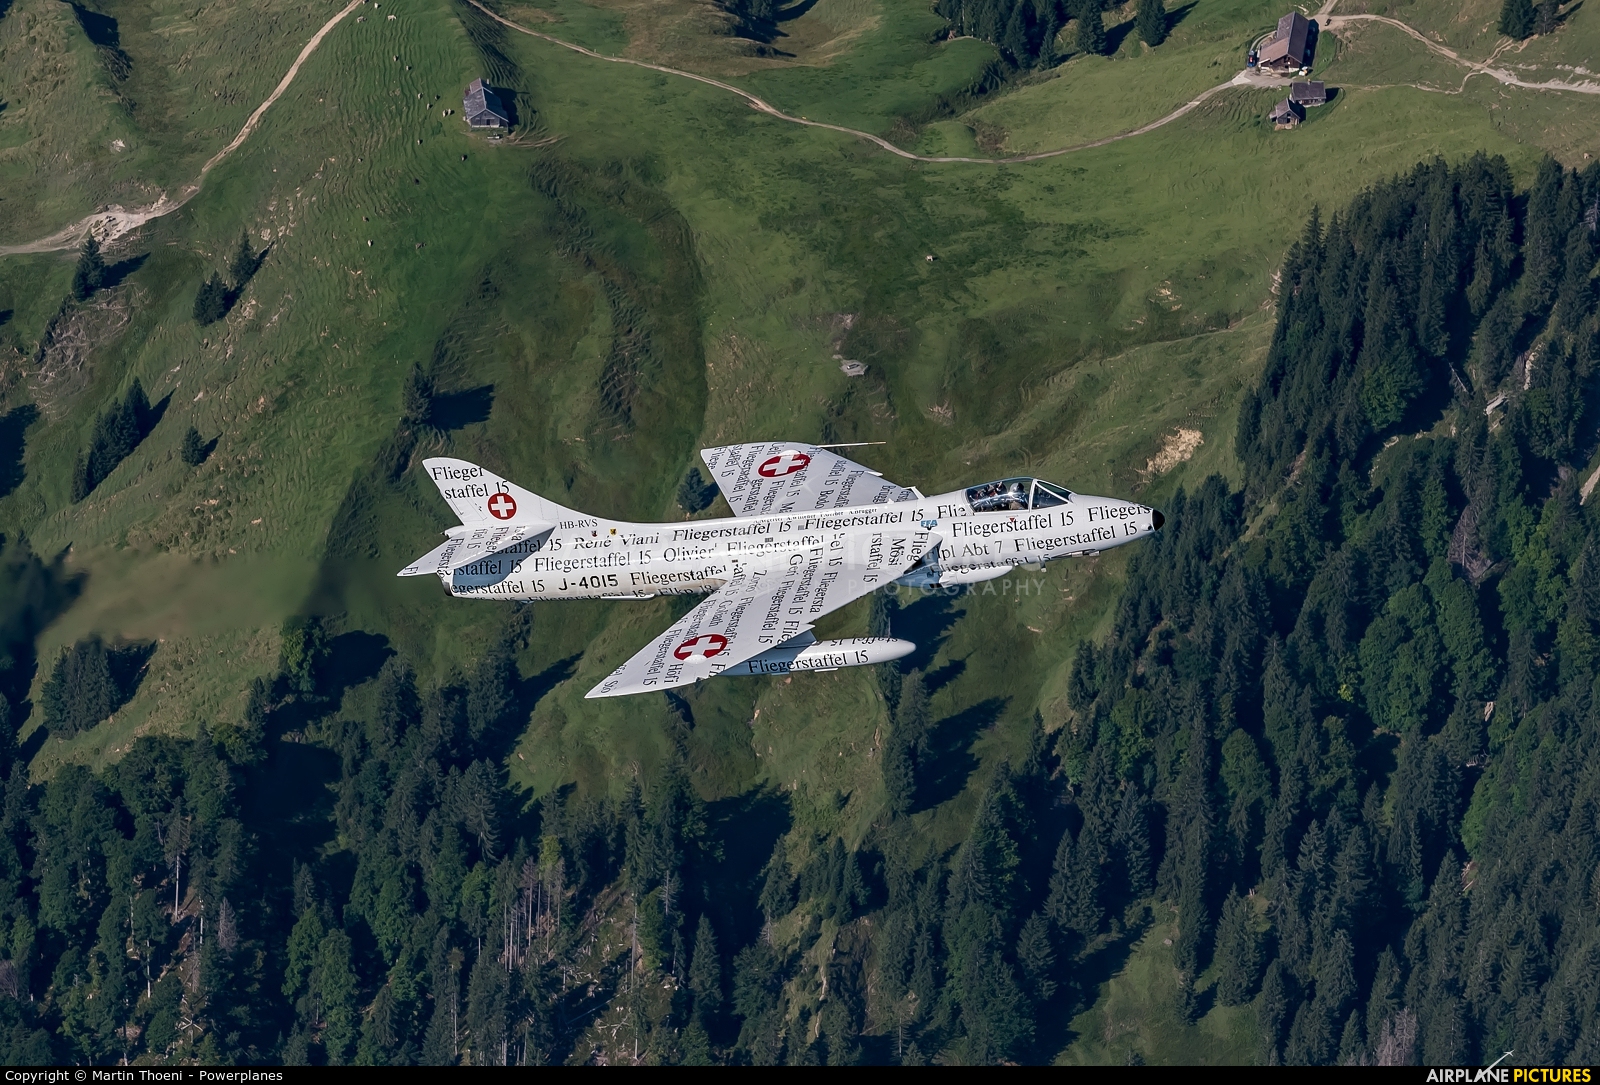 Hunterverein Obersimmenthal HB-RVS aircraft at In Flight - Switzerland